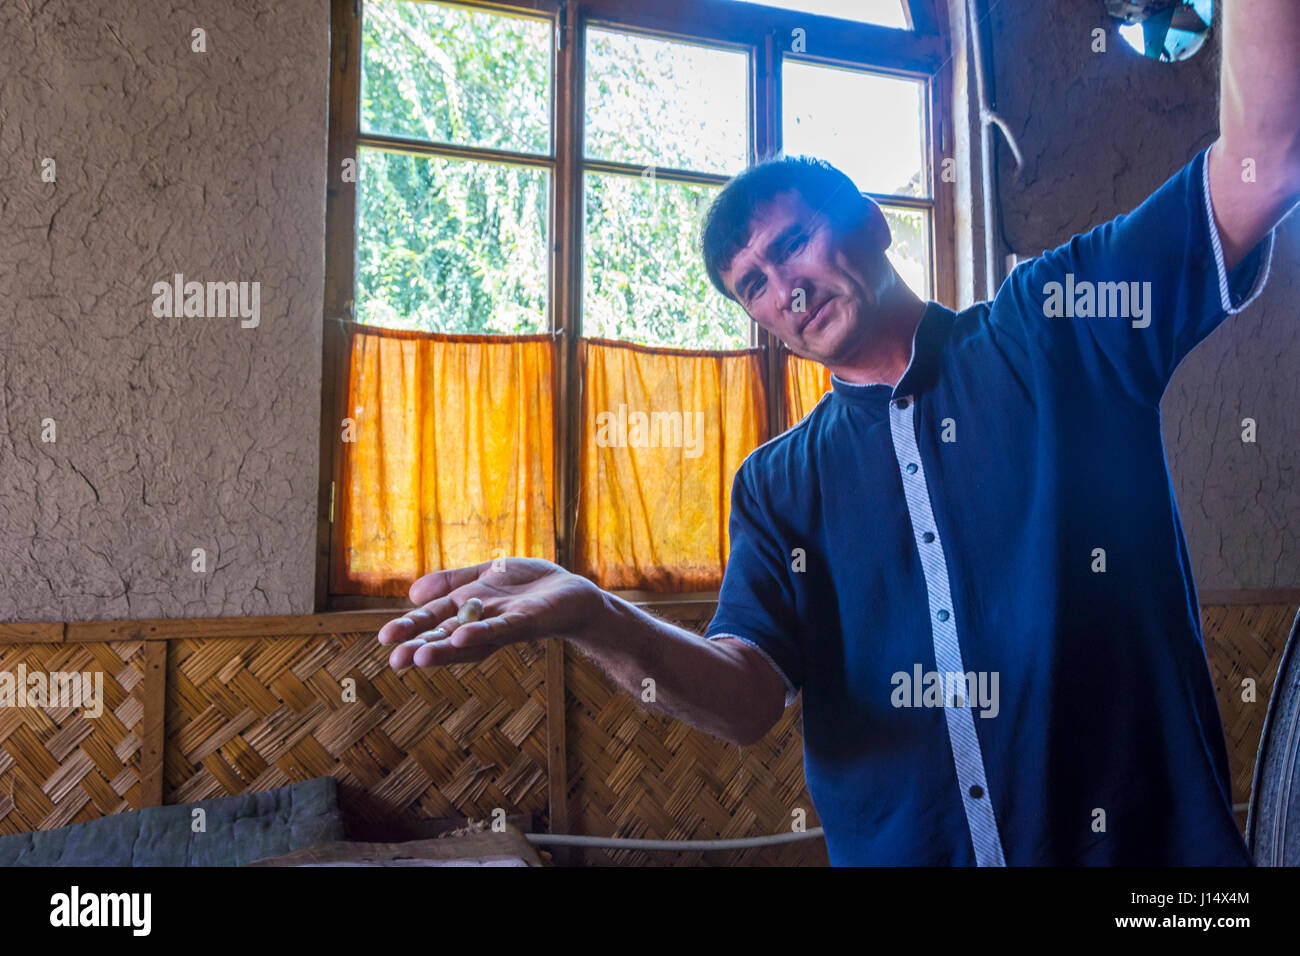 MARGILAN, UZBEKISTAN - AUGUST 20: Man showing silk thread coming from a silkworm cocoon in a silk factory. August 2016 Stock Photo